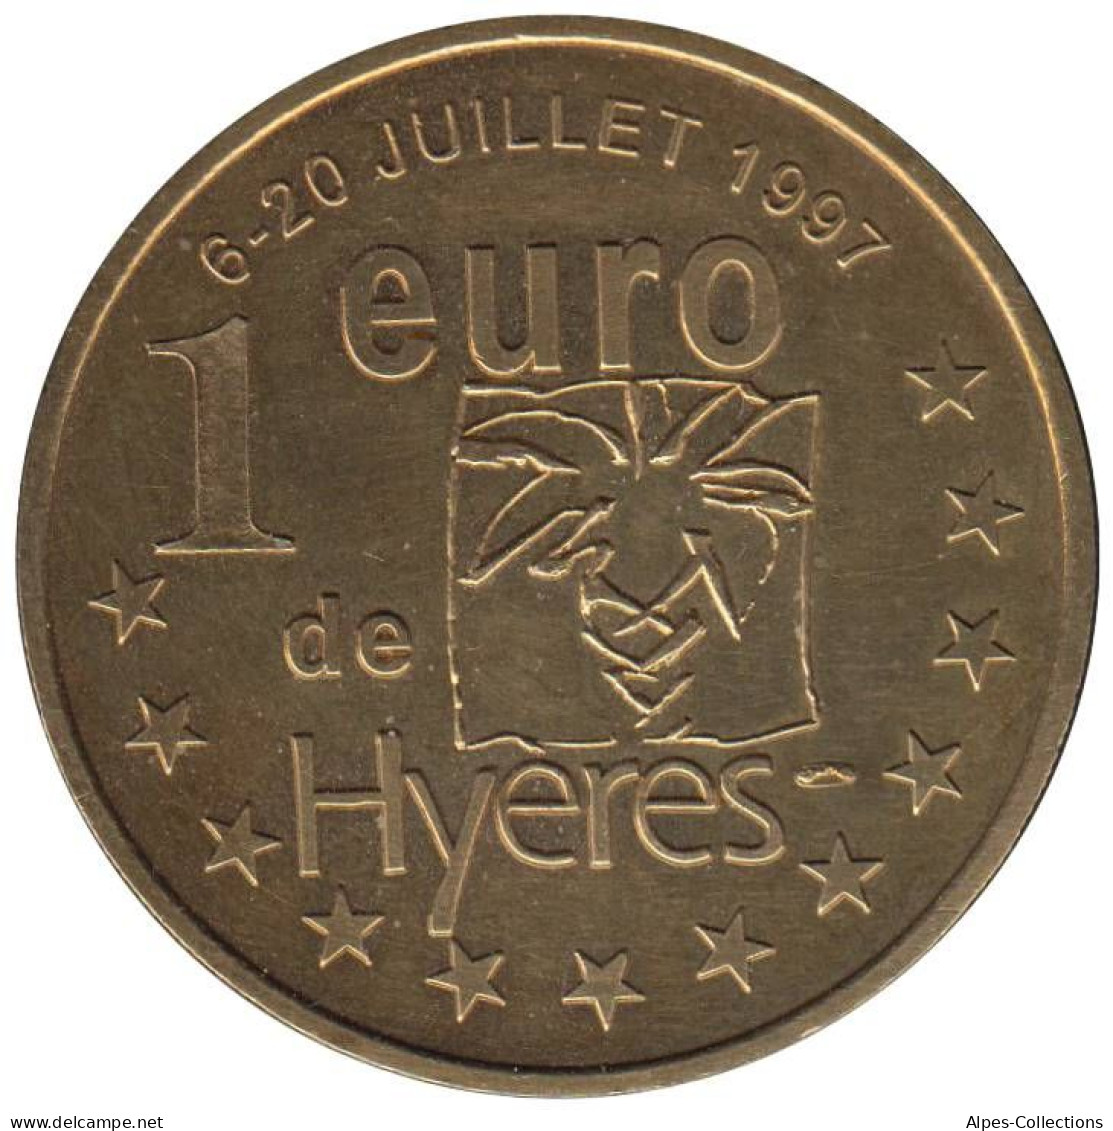 HYERES - EU0010.1 - 1 EURO DES VILLES - Réf: T295 - 1997 - Euros Of The Cities